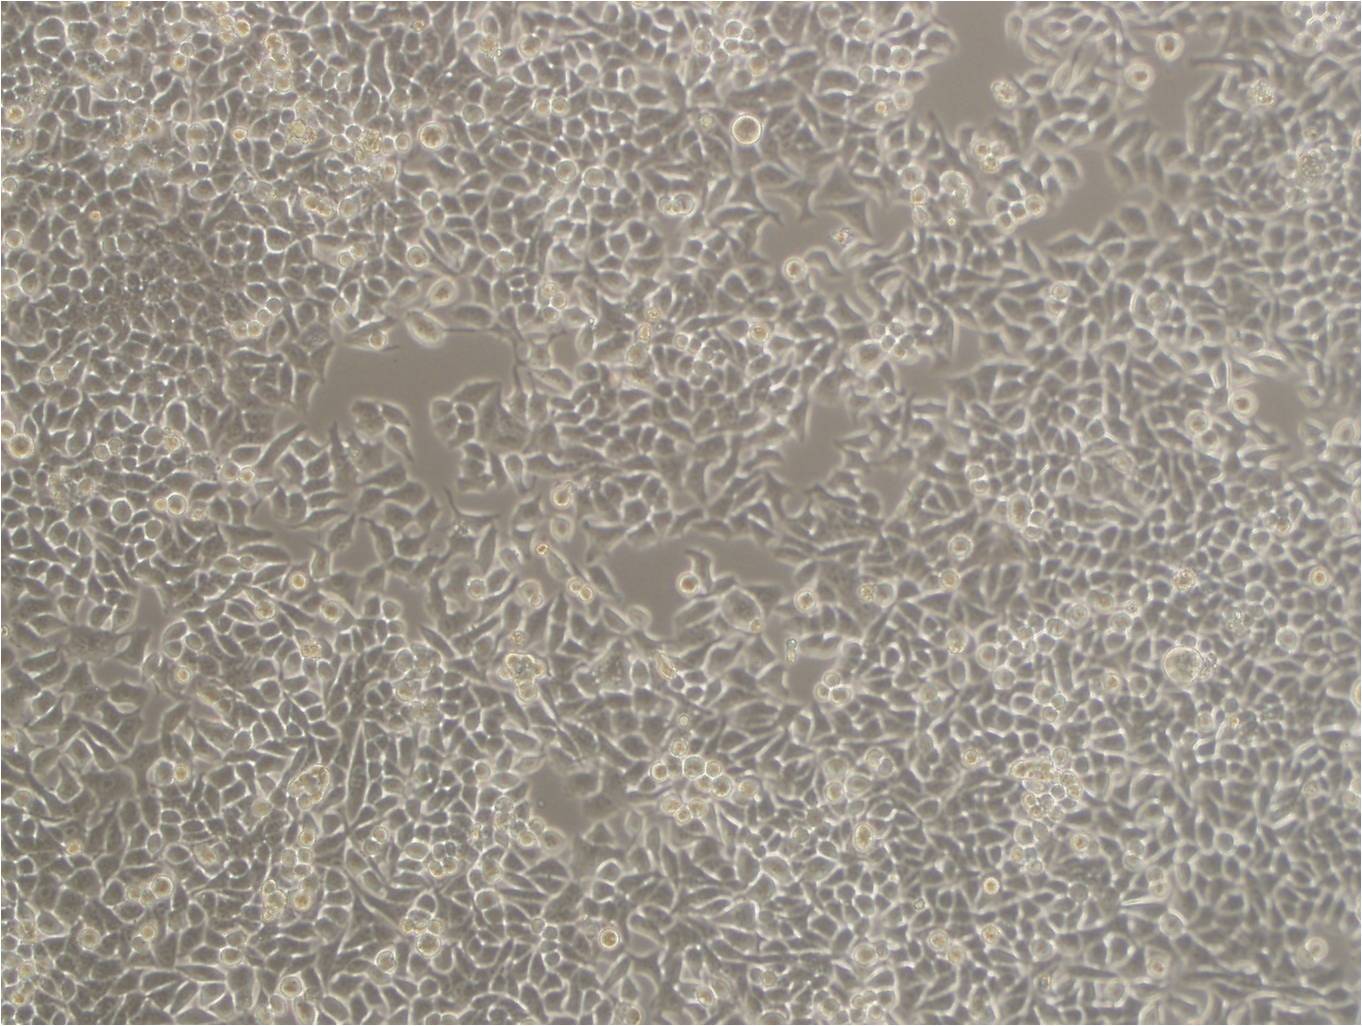 M2-10B4 cell line小鼠骨髓纤维原细胞系